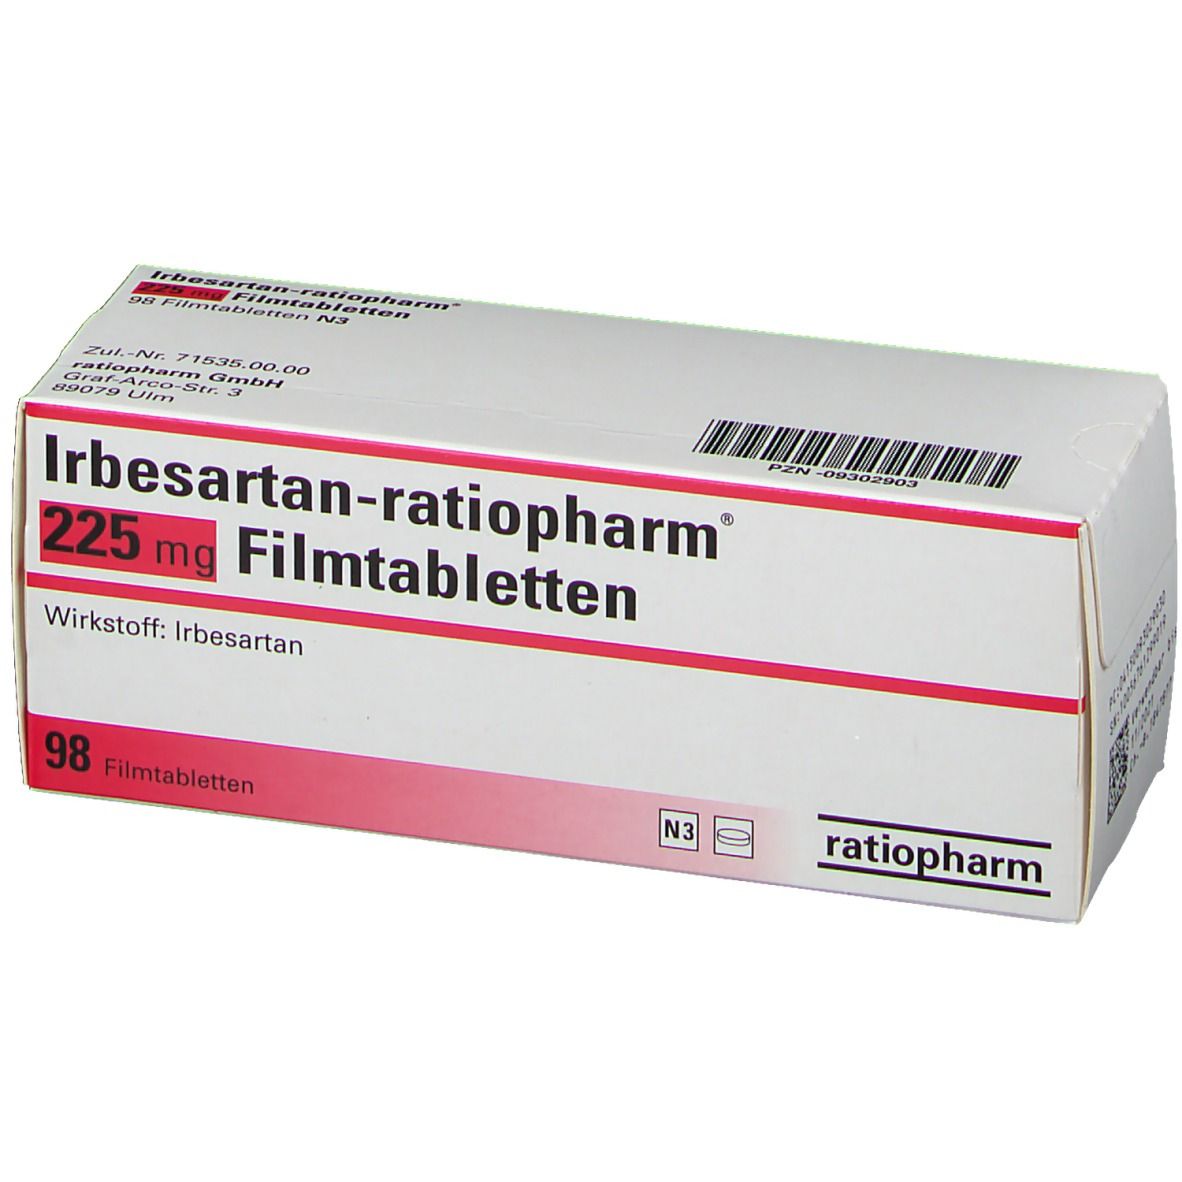 Irbesartan-ratiopharm® 225 mg